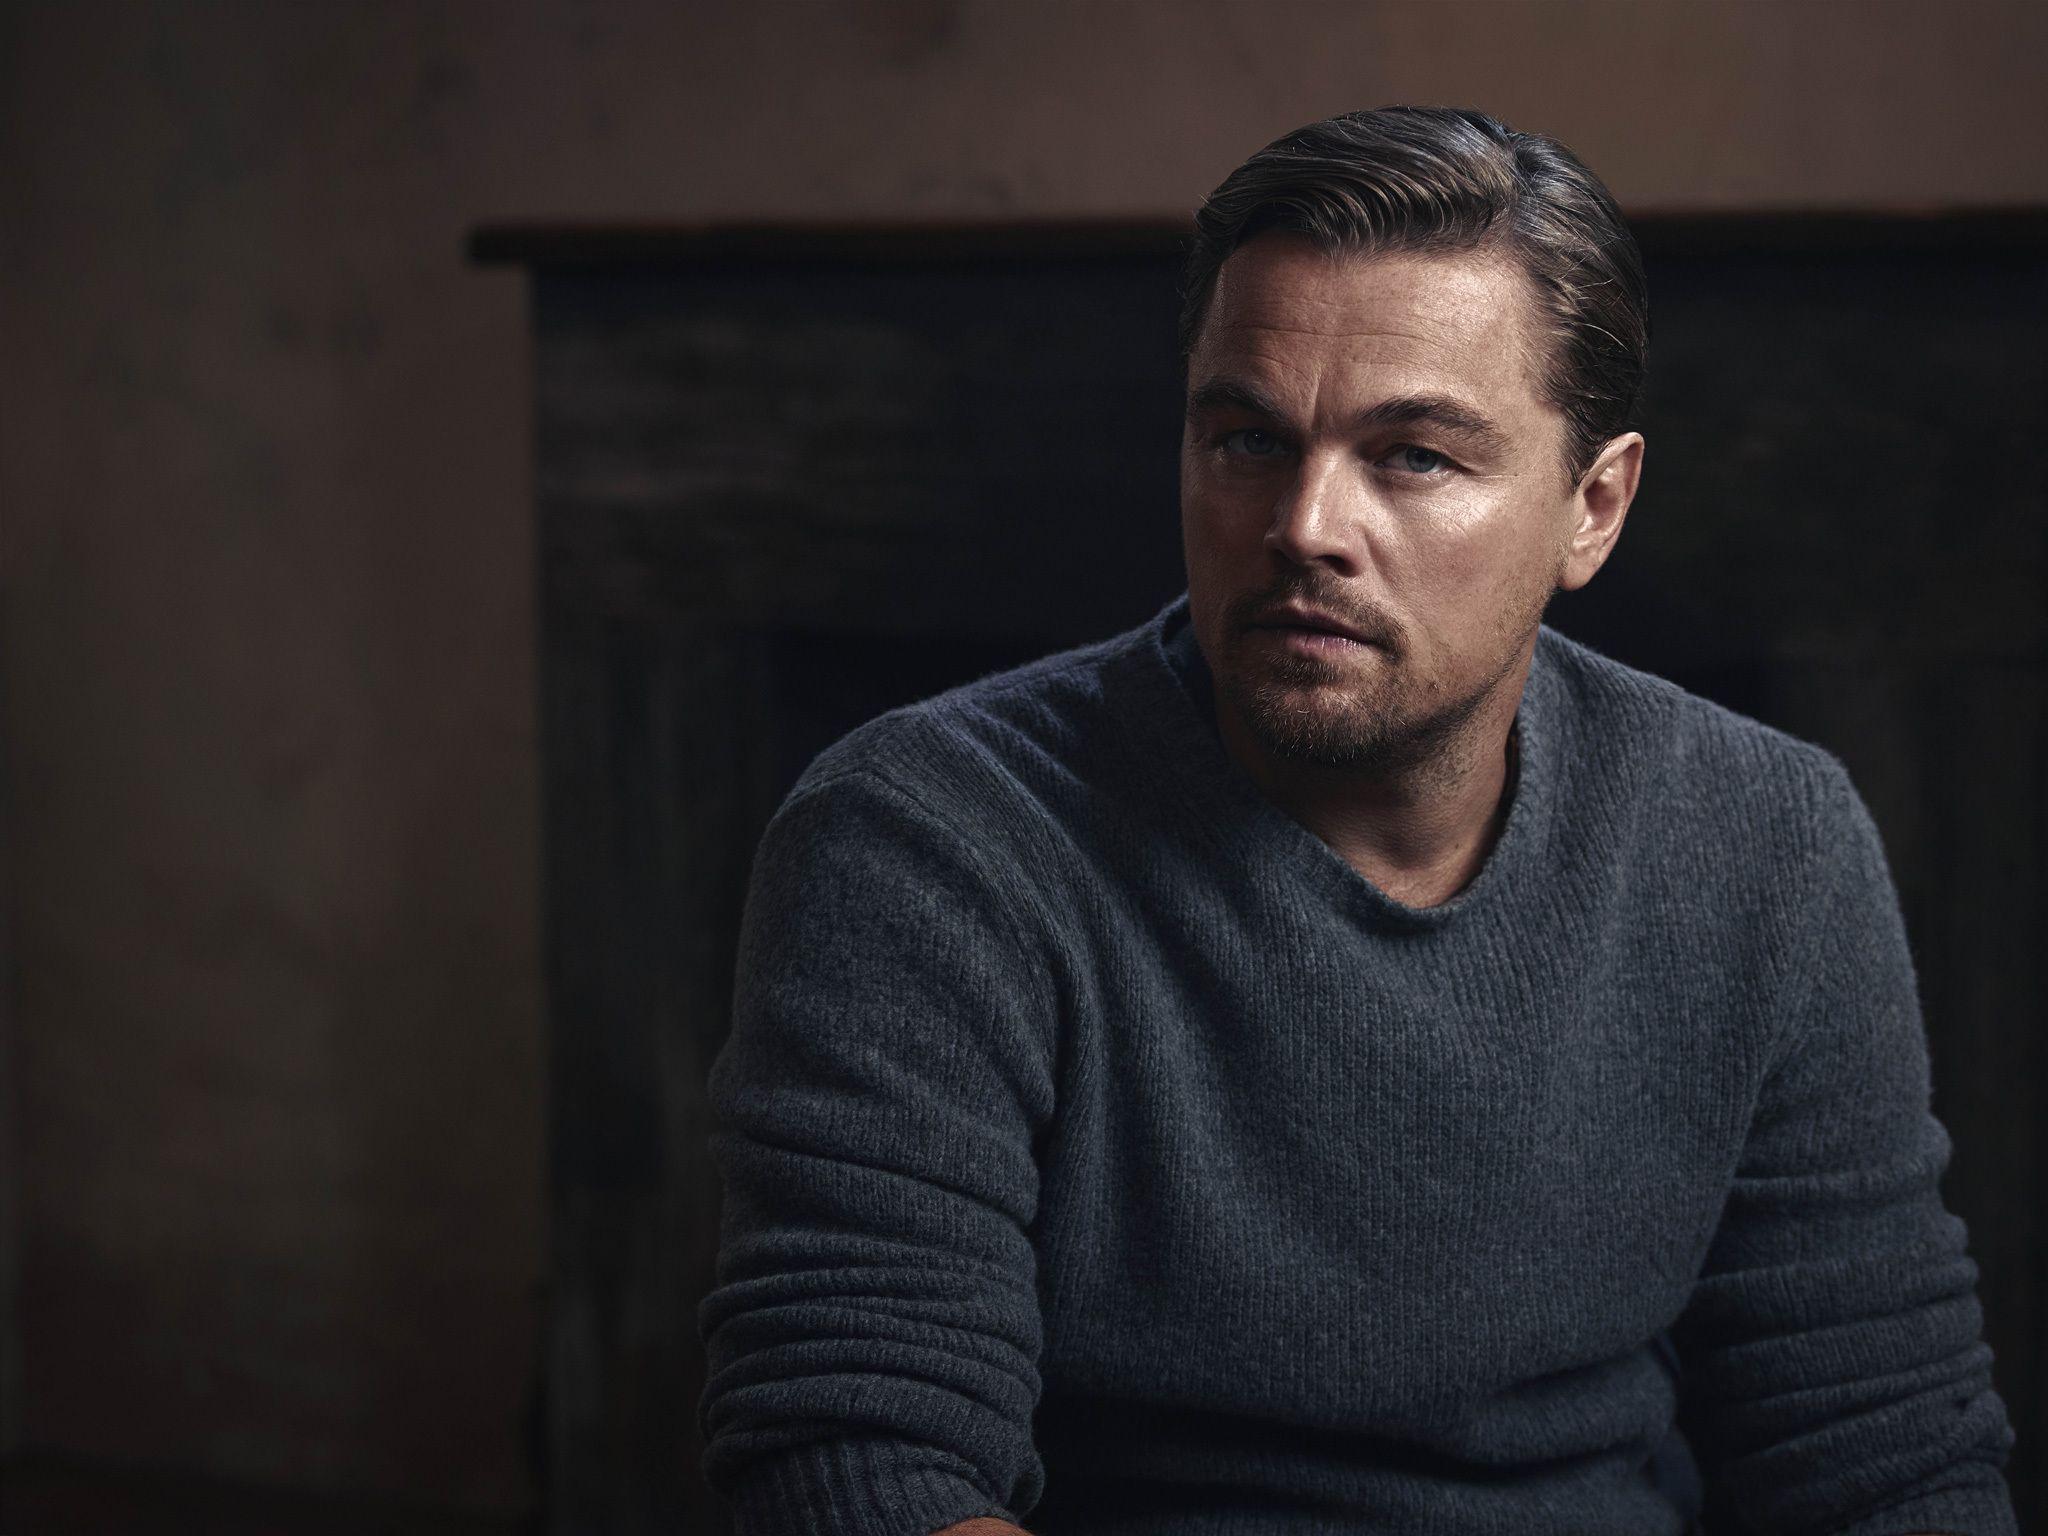 Leonardo DiCaprio interview: 'I will always feel like an outsider'